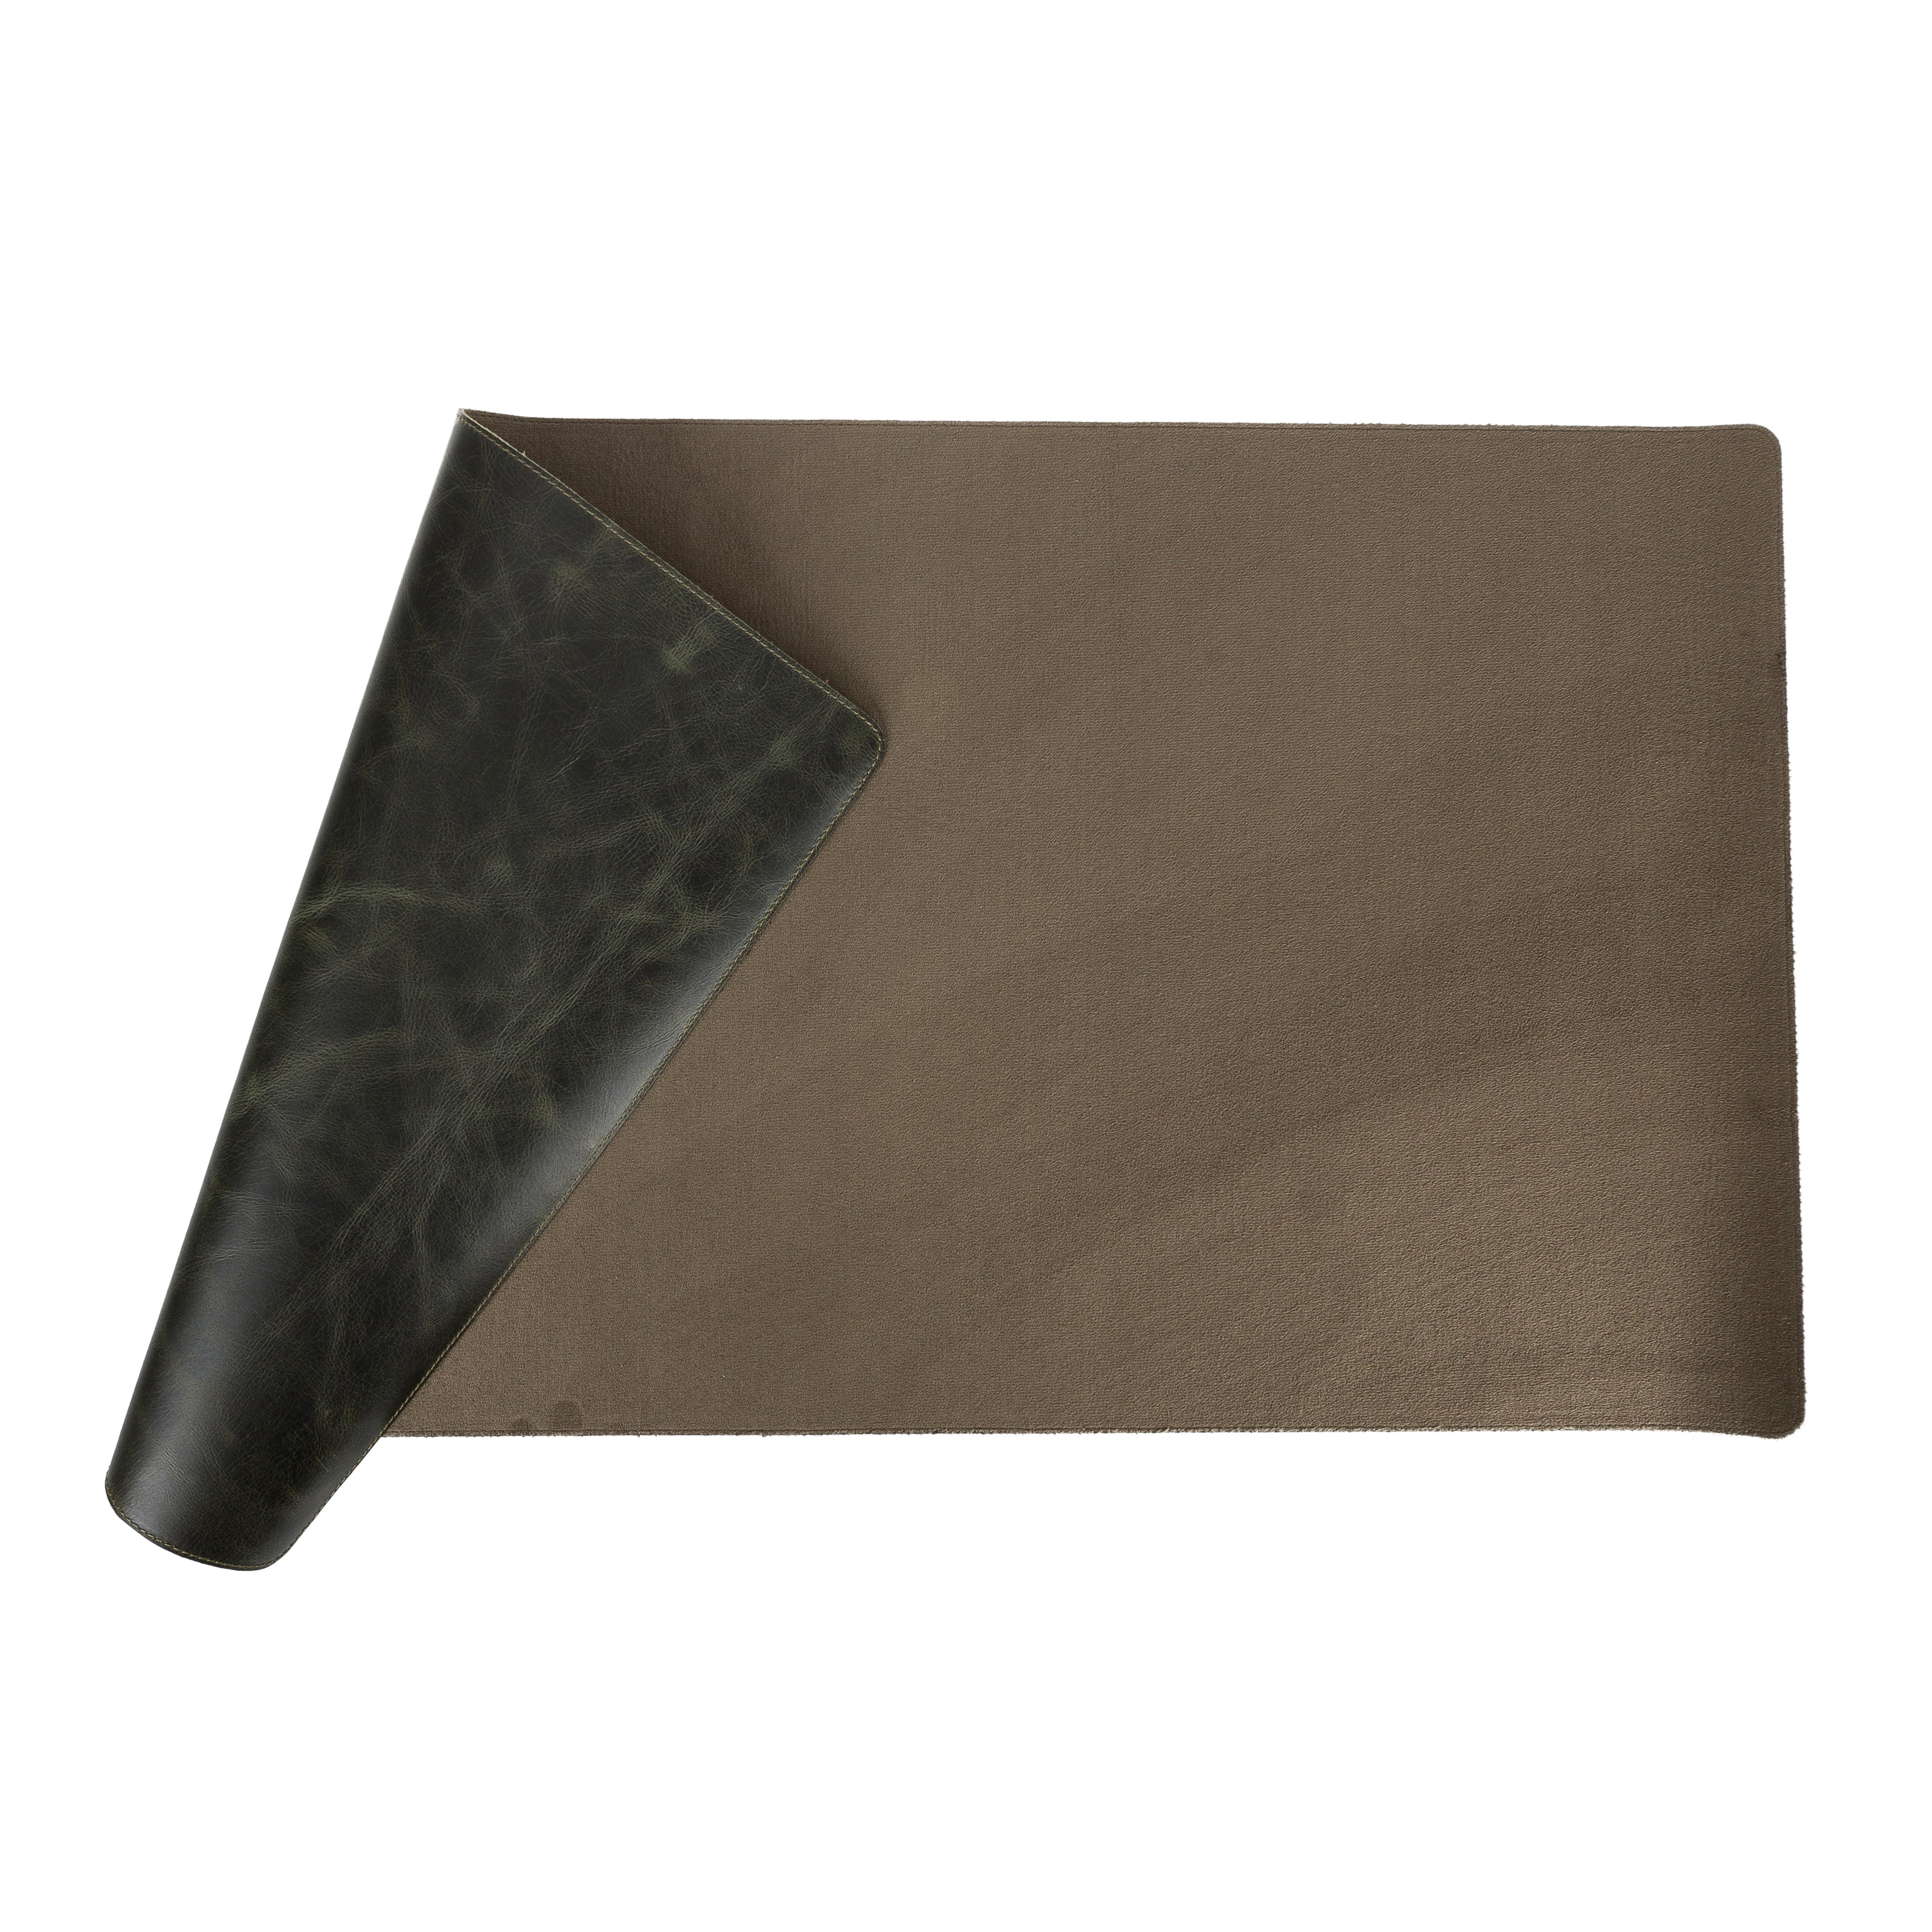 DelfiCase Genuine Dark Green Leather Deskmat, Computer Pad, Office Desk Pad 7